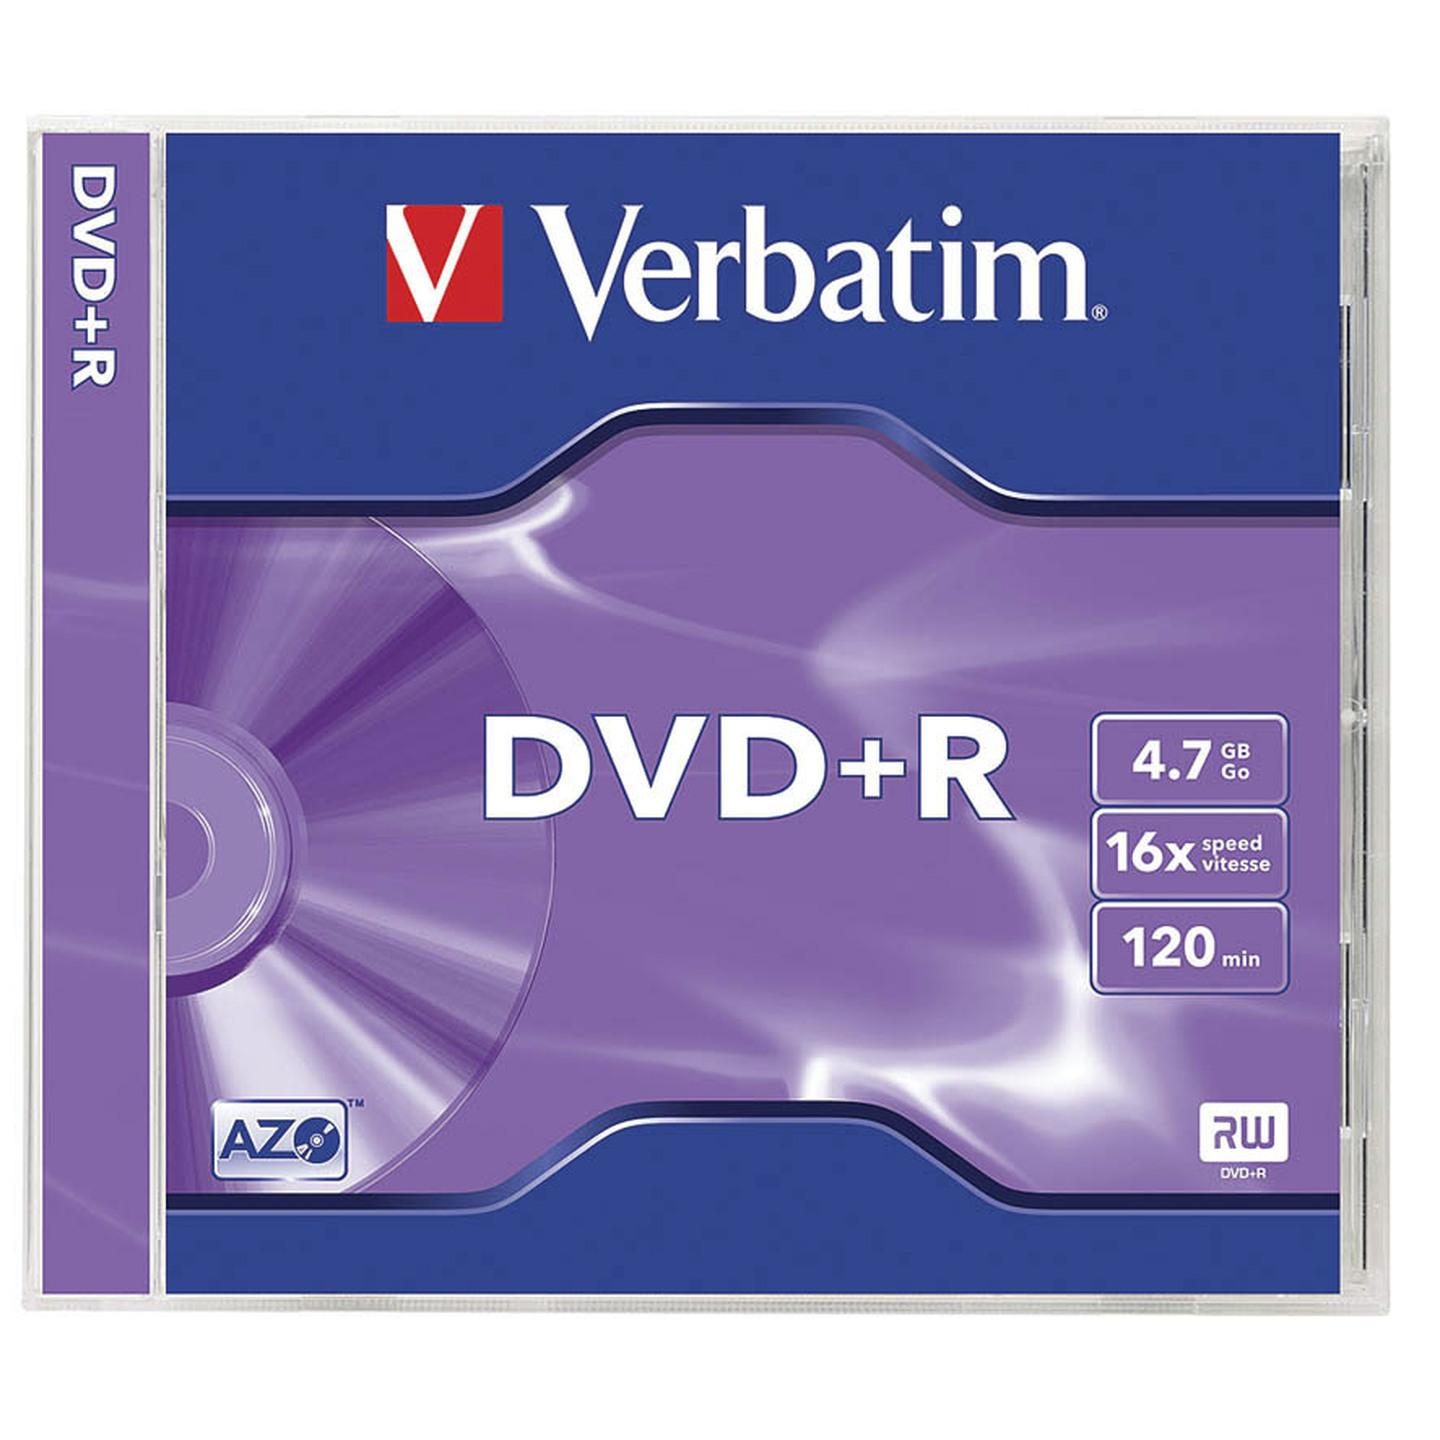 Verbatim DataLifePlus Azo DVDR 4.7 GB Jewel Case Singles 16x